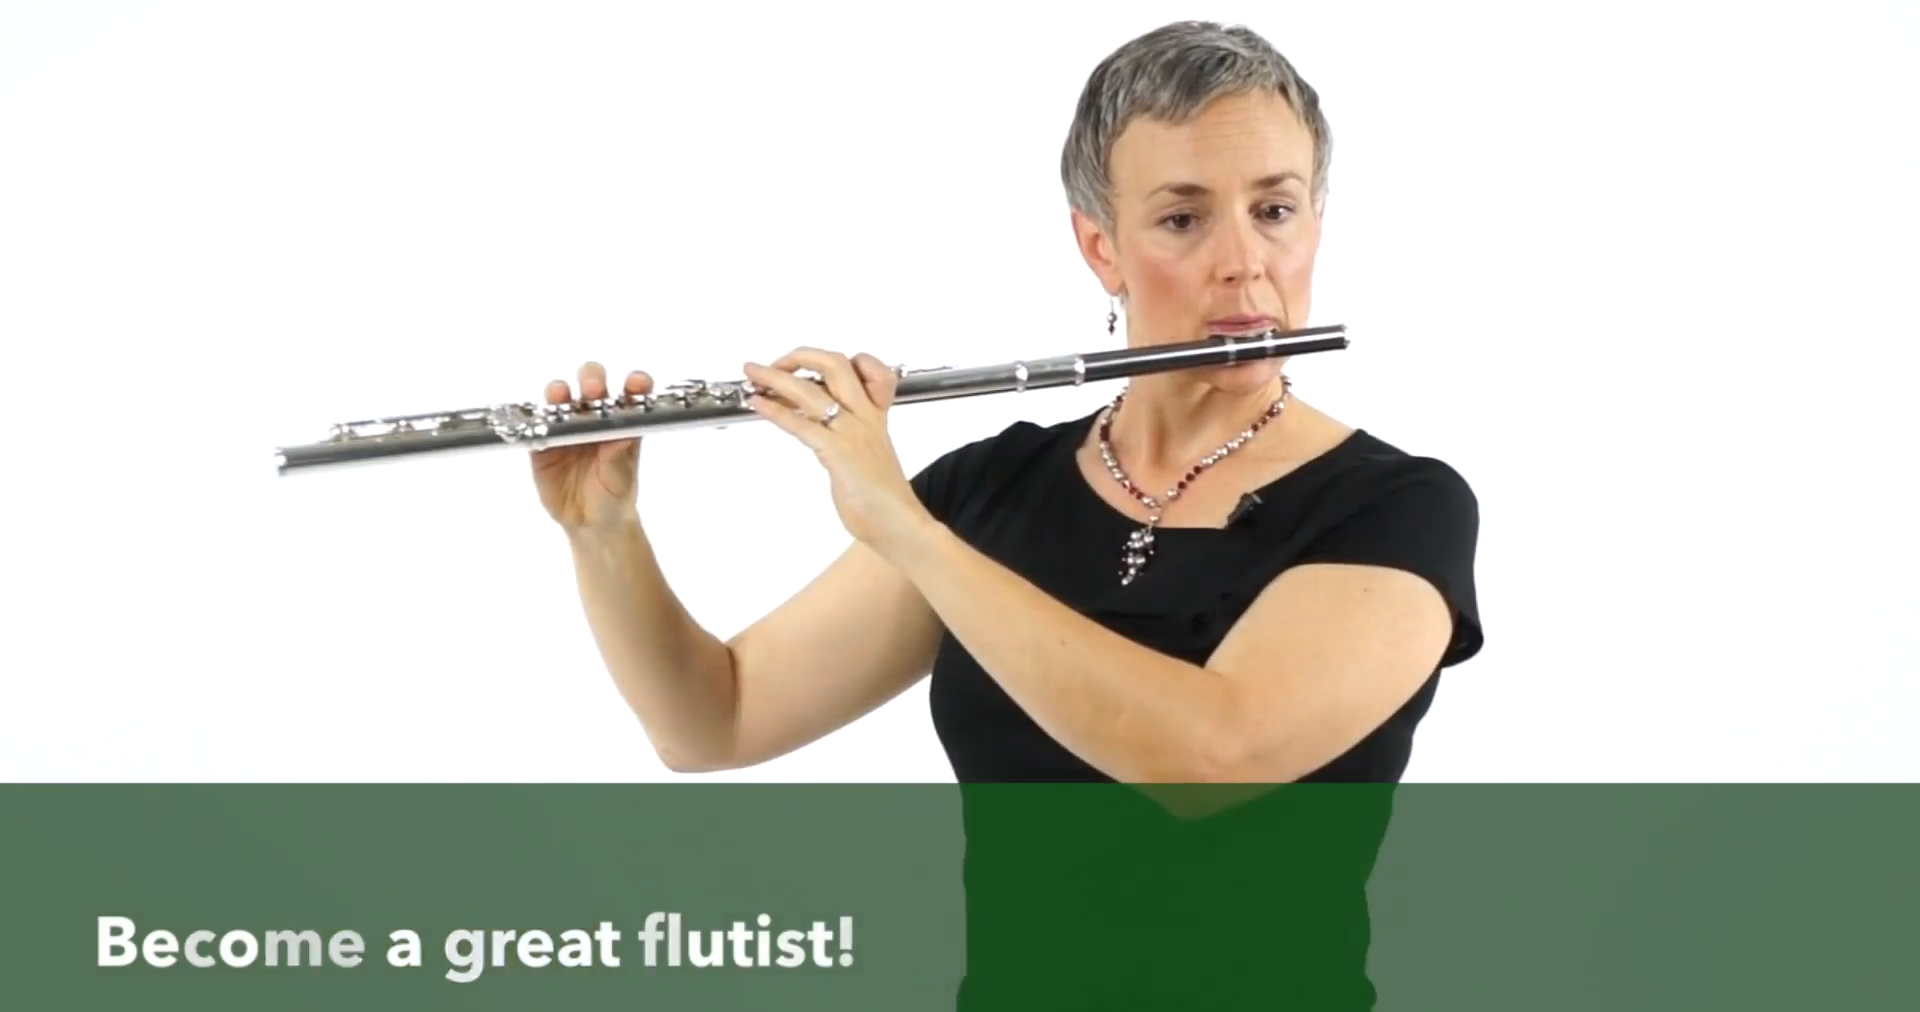 Flutist course Udemy